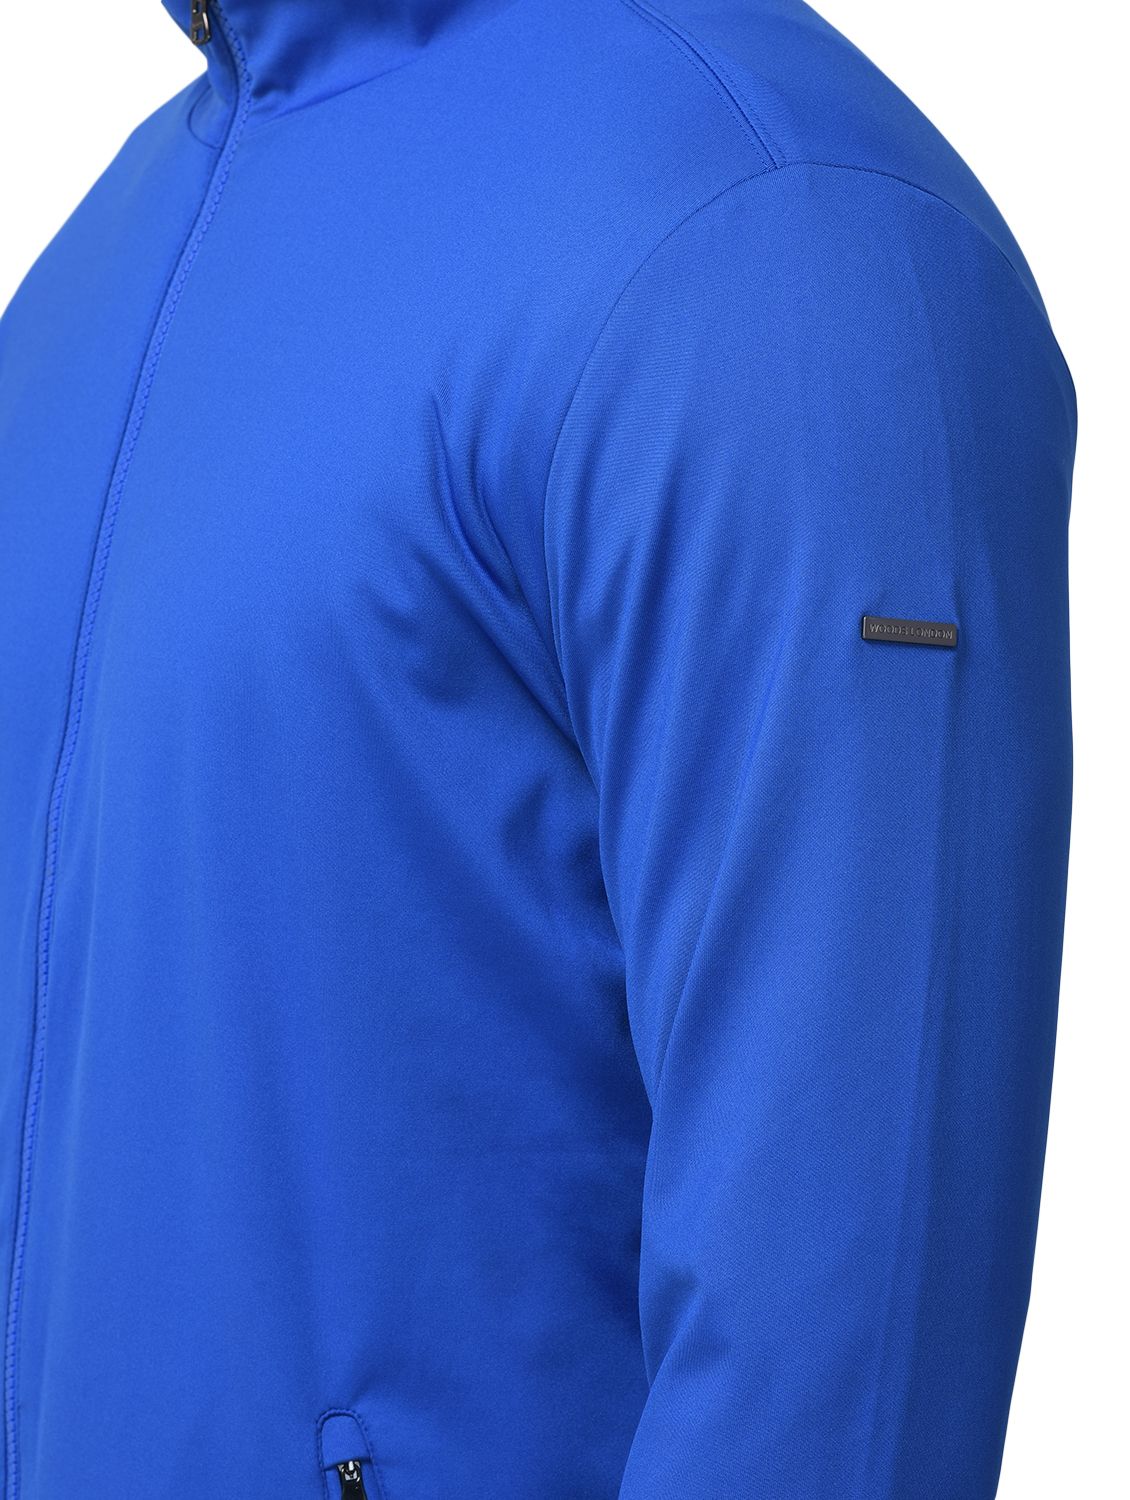 NEW Crivit Jacket Mens Size Large Blue Full Zip Long Sleeve Pockets Cotton